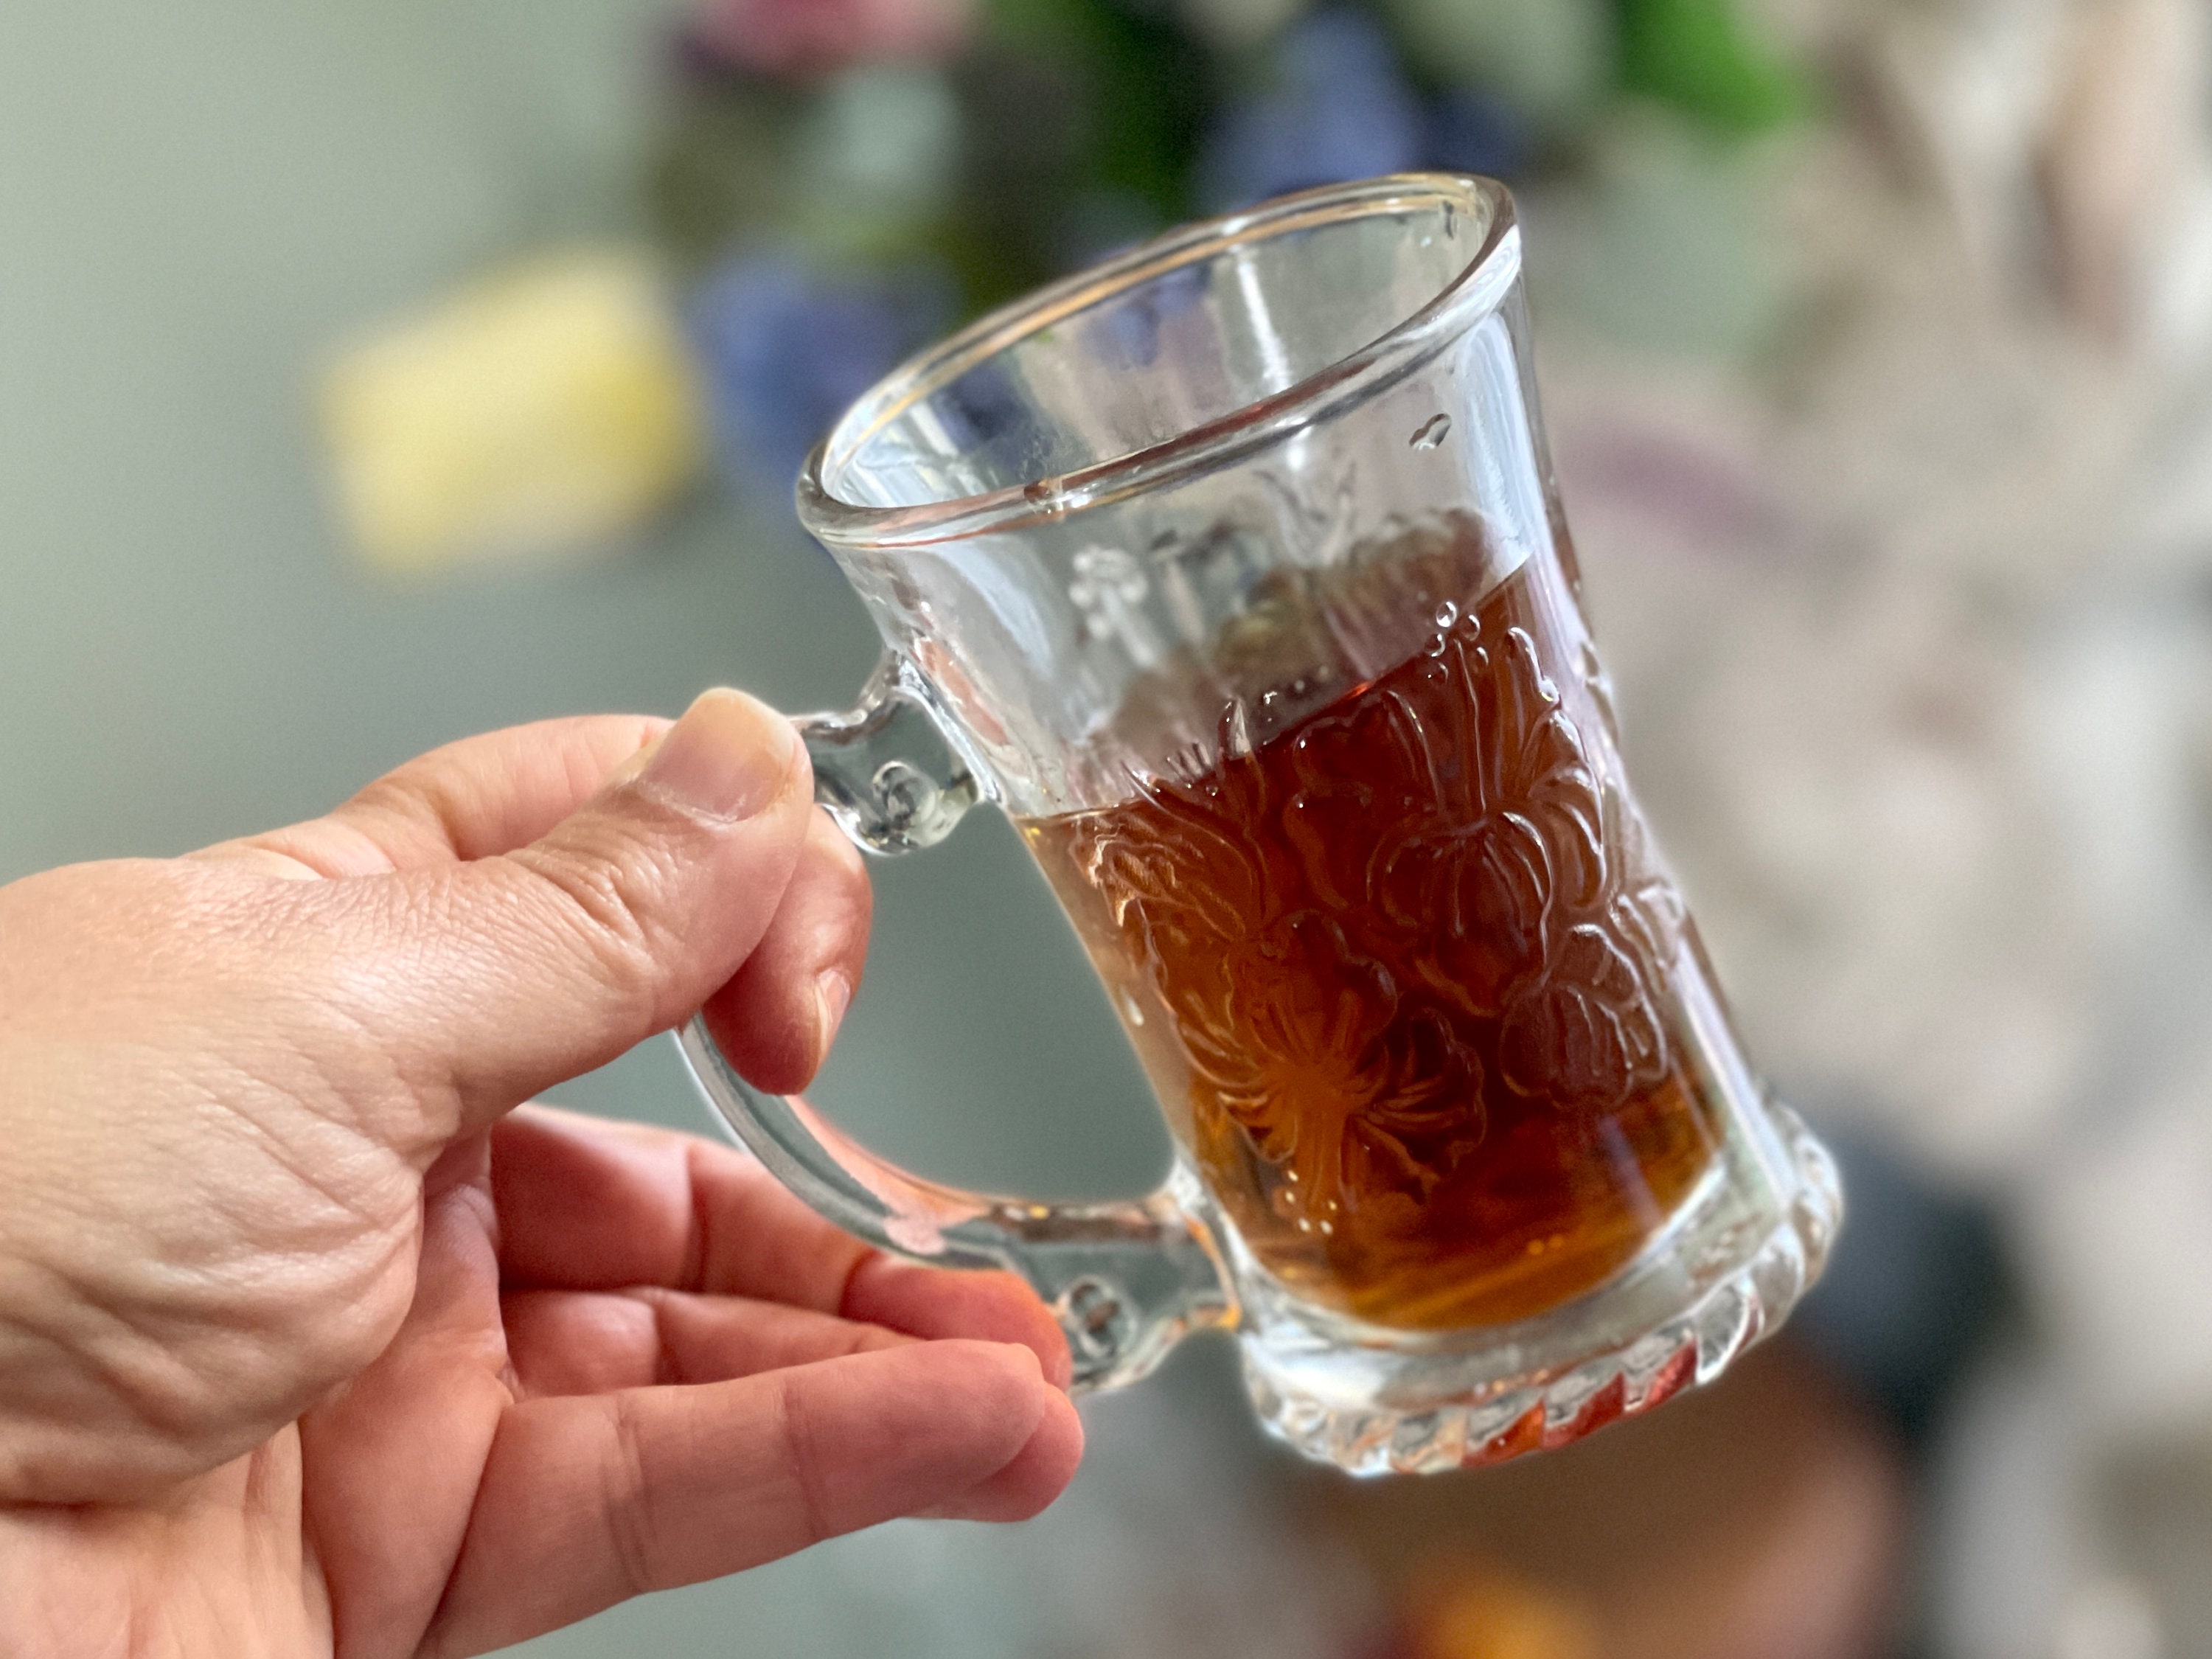 Egret Island Tea/Coffee Glass